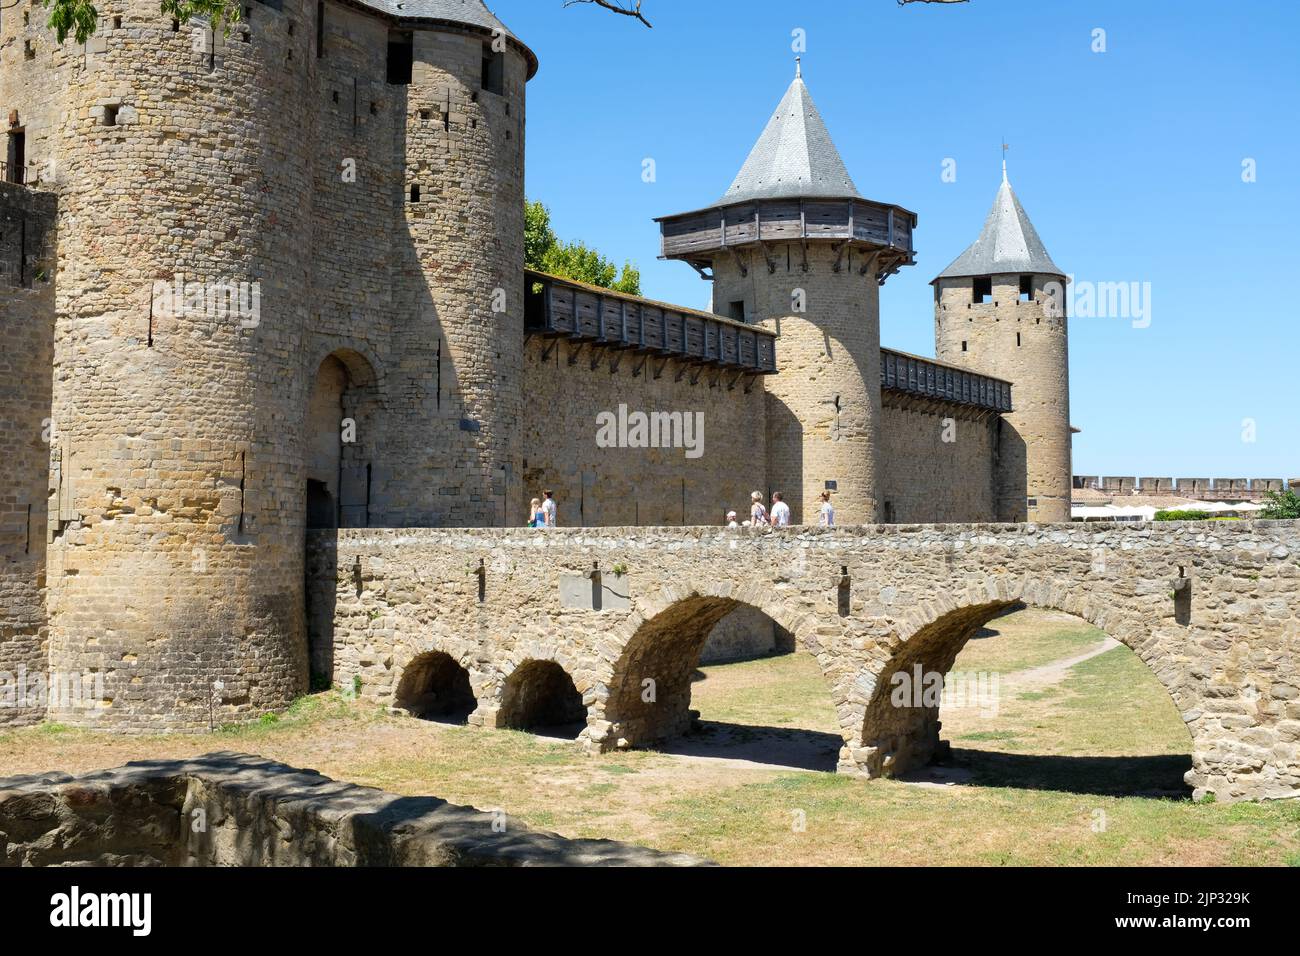 La Citie. Castello medievale a Carcassonne Francia. Foto Stock